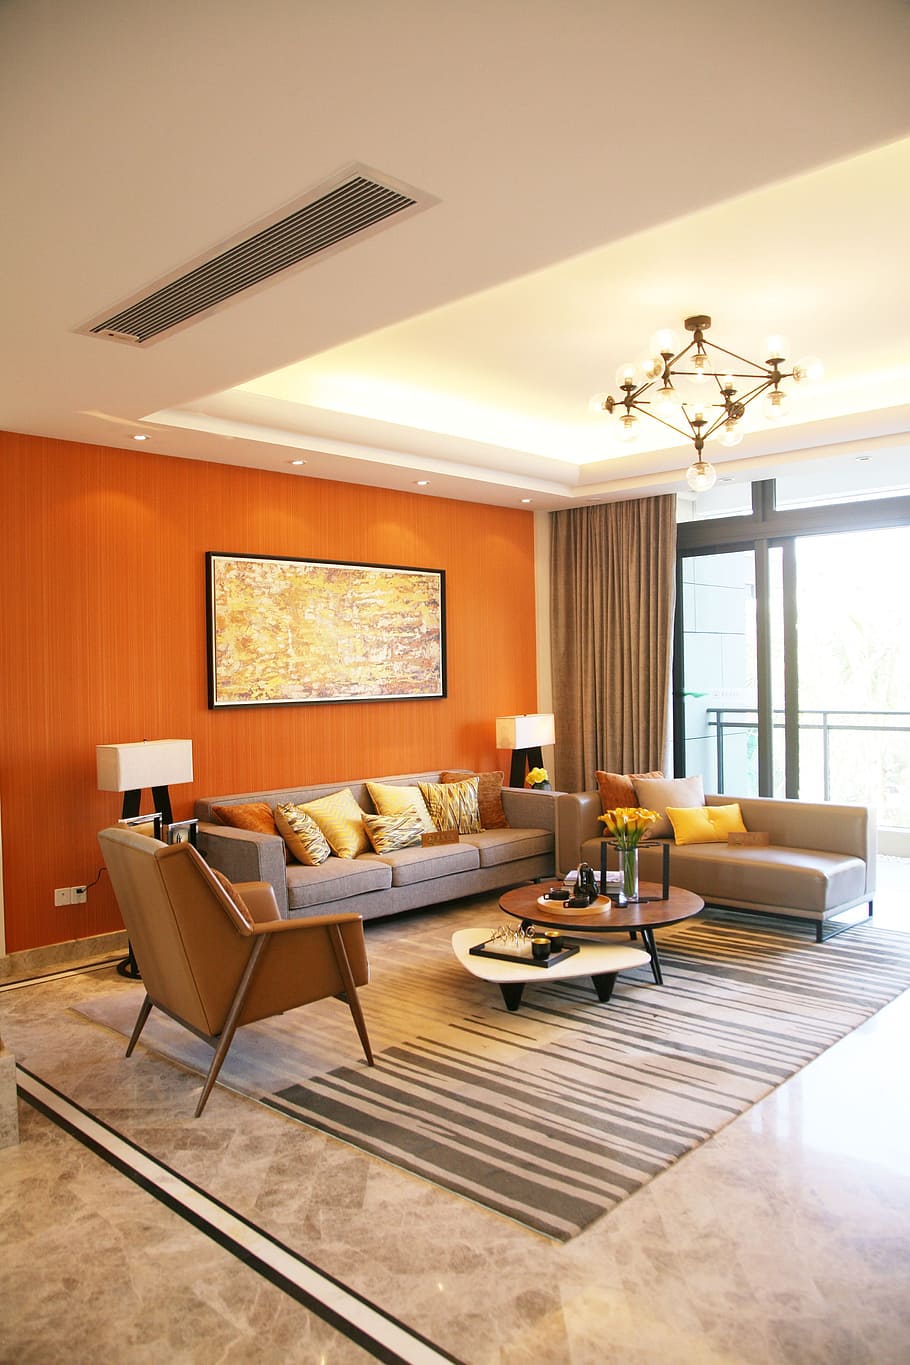 Real Estate, Sample, Room, Hainan, sample room, luxury, home showcase interior, living room, home interior, architecture